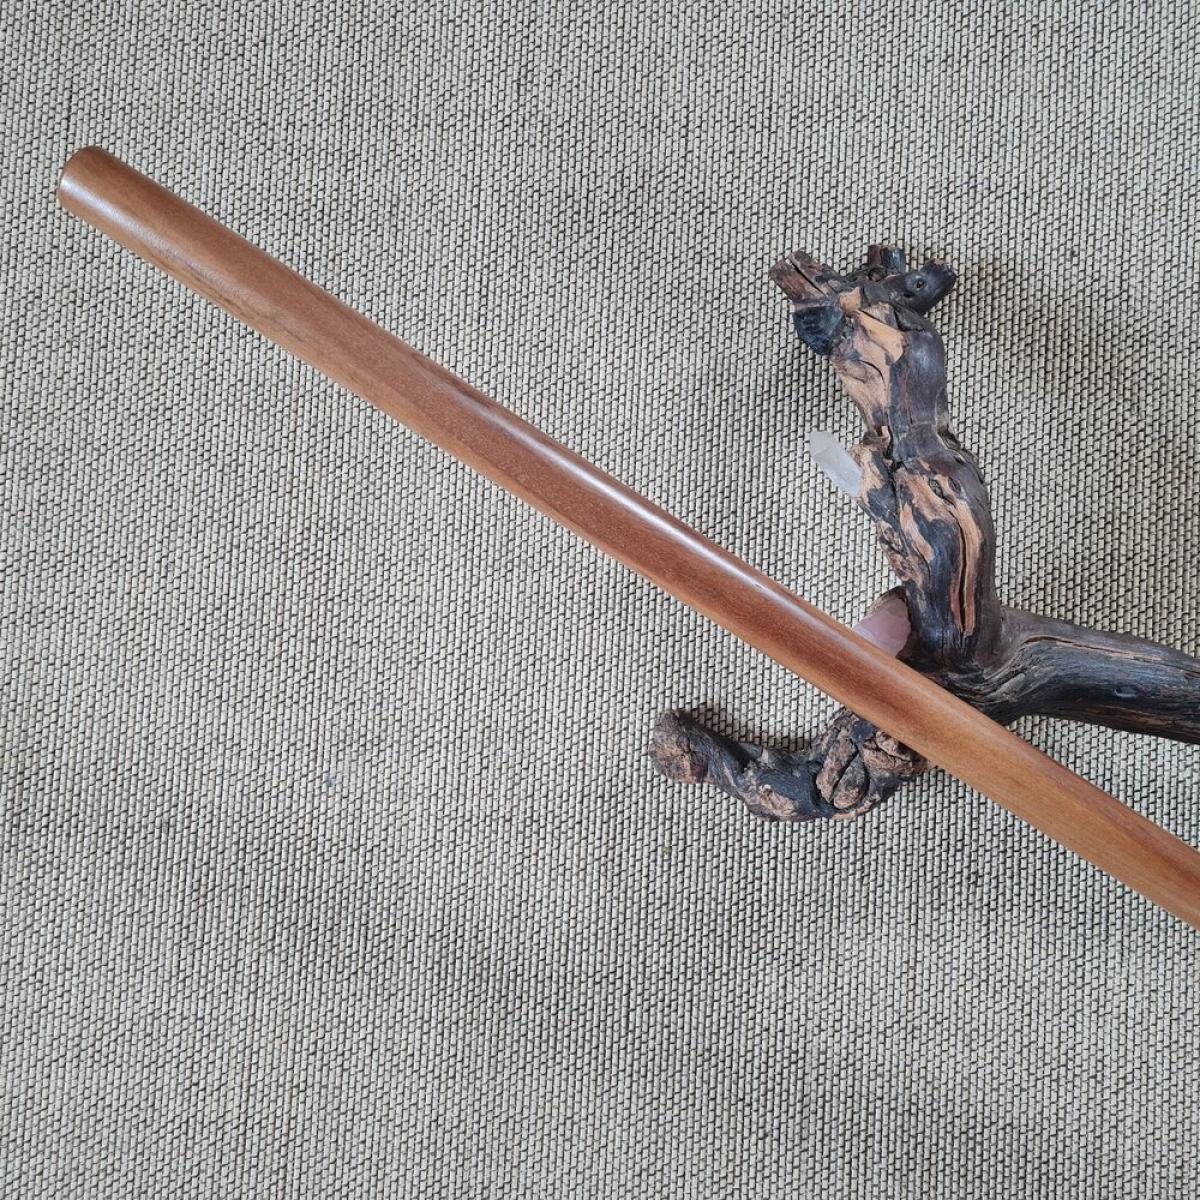 Jo-Stab aus Supa-Holz - Länge 135 cm ➤ www.bokken-shop.de. Passend für Aikido, Iaido, Jo-Jutsu, Jodo, Bujinkan. Dein Budo-Fachhändler!